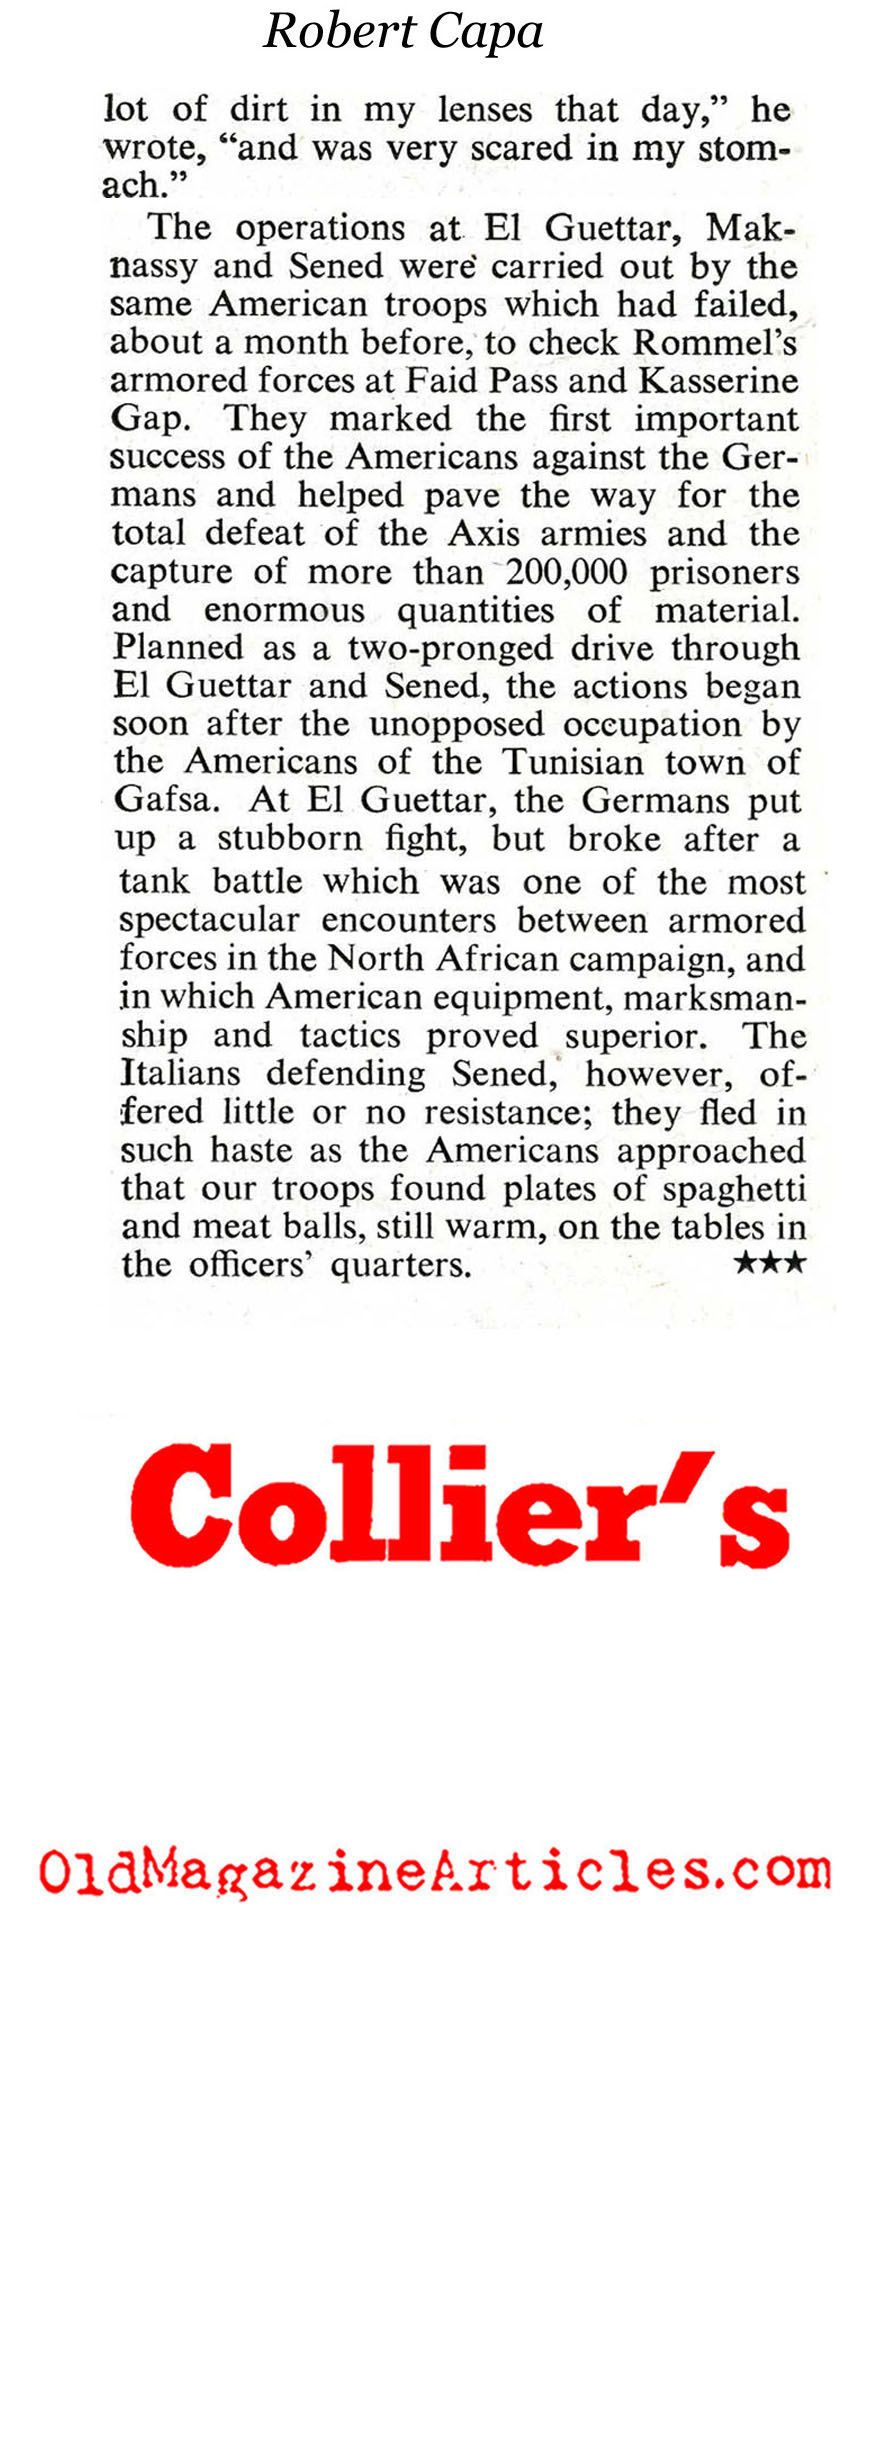 Robert Capa in Tunisia (Collier's Magazine, 1943)